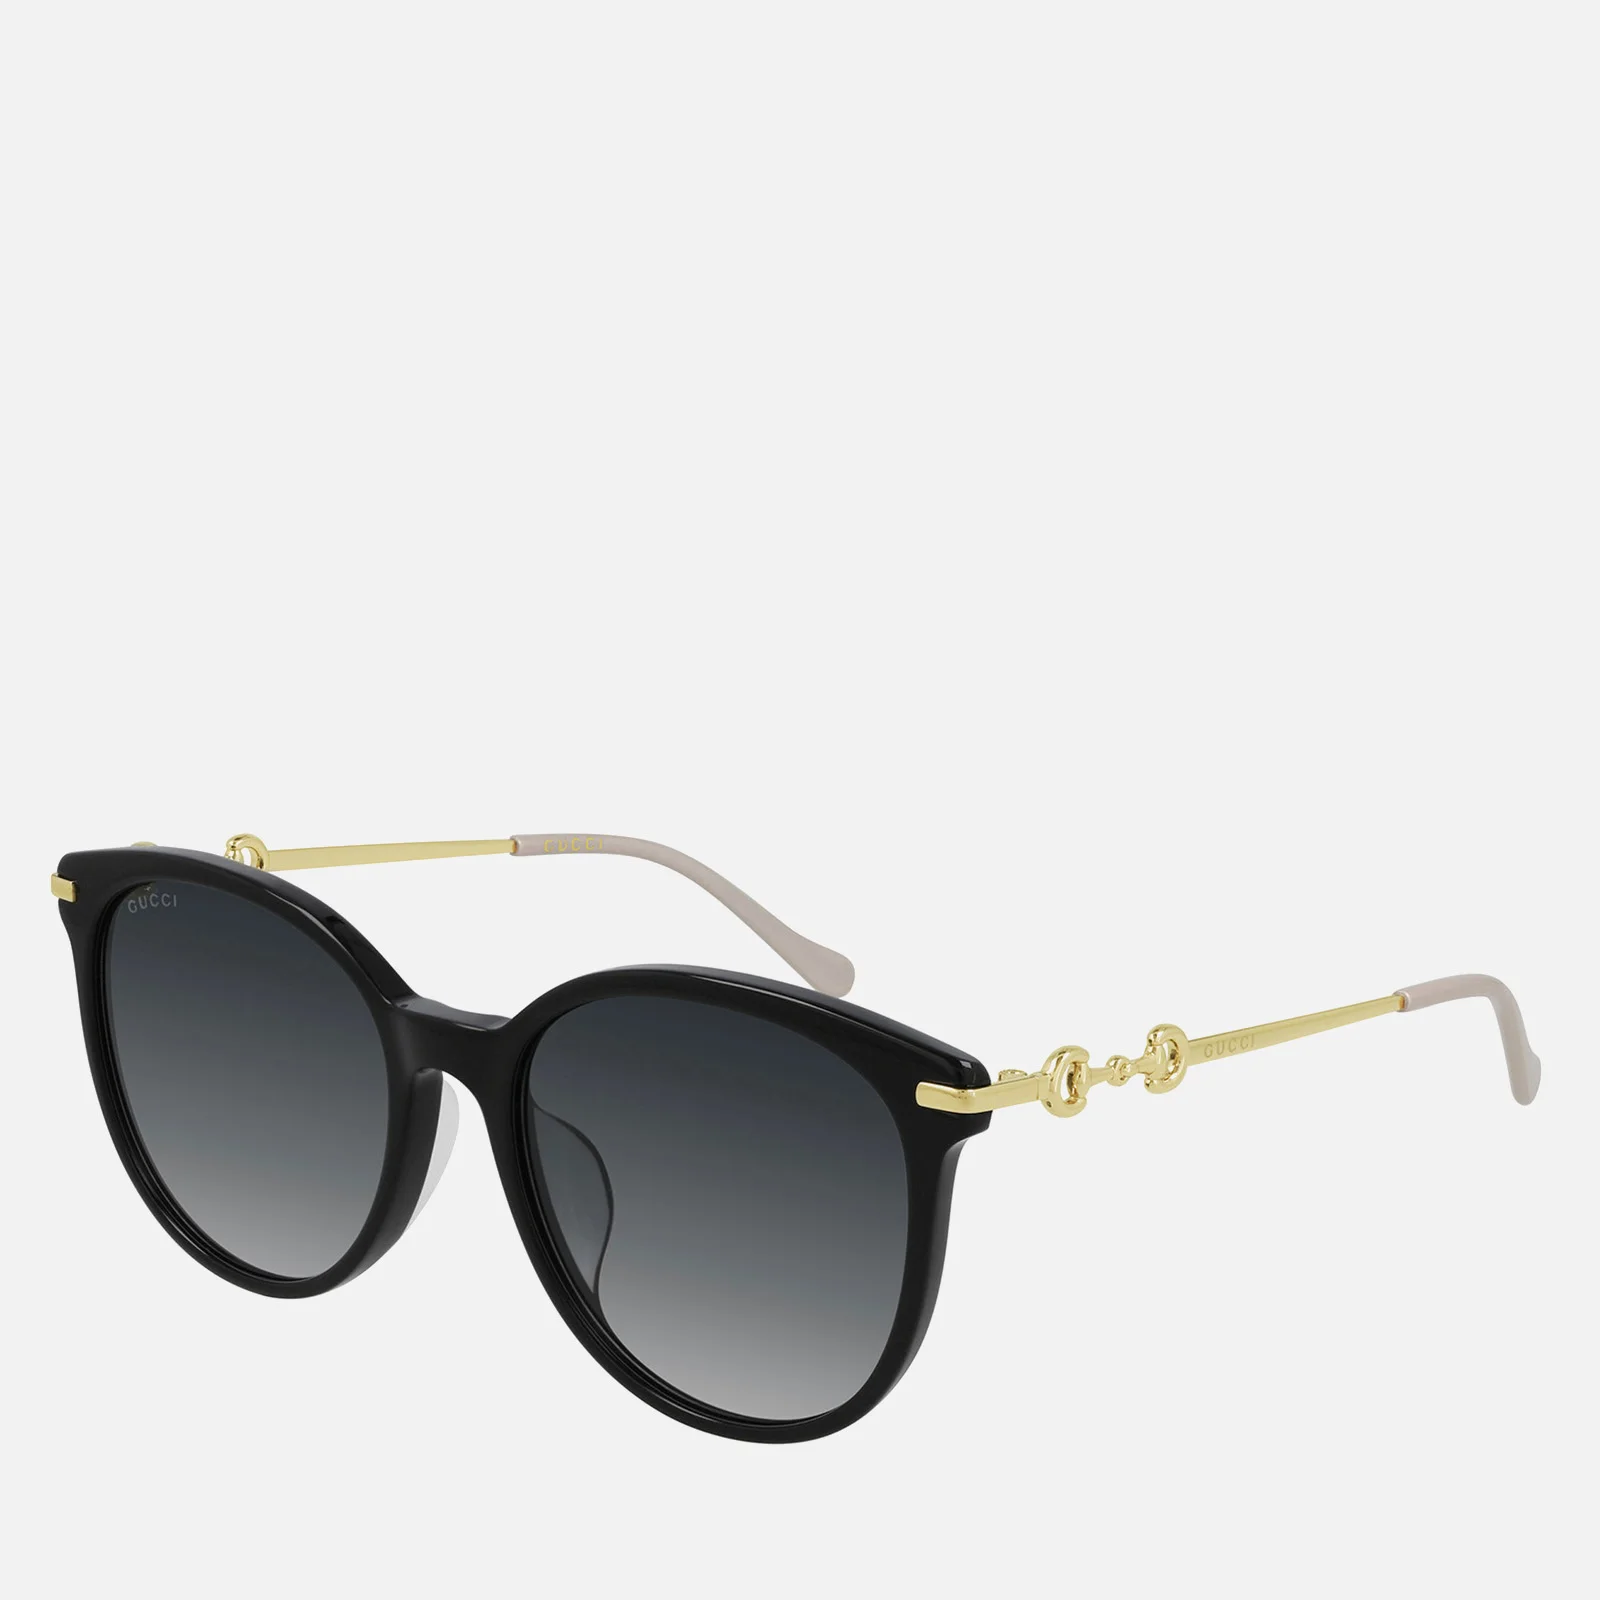 Gucci Women's Horsebit Combi Frame Sunglasses - Black/Gold/Grey Image 1